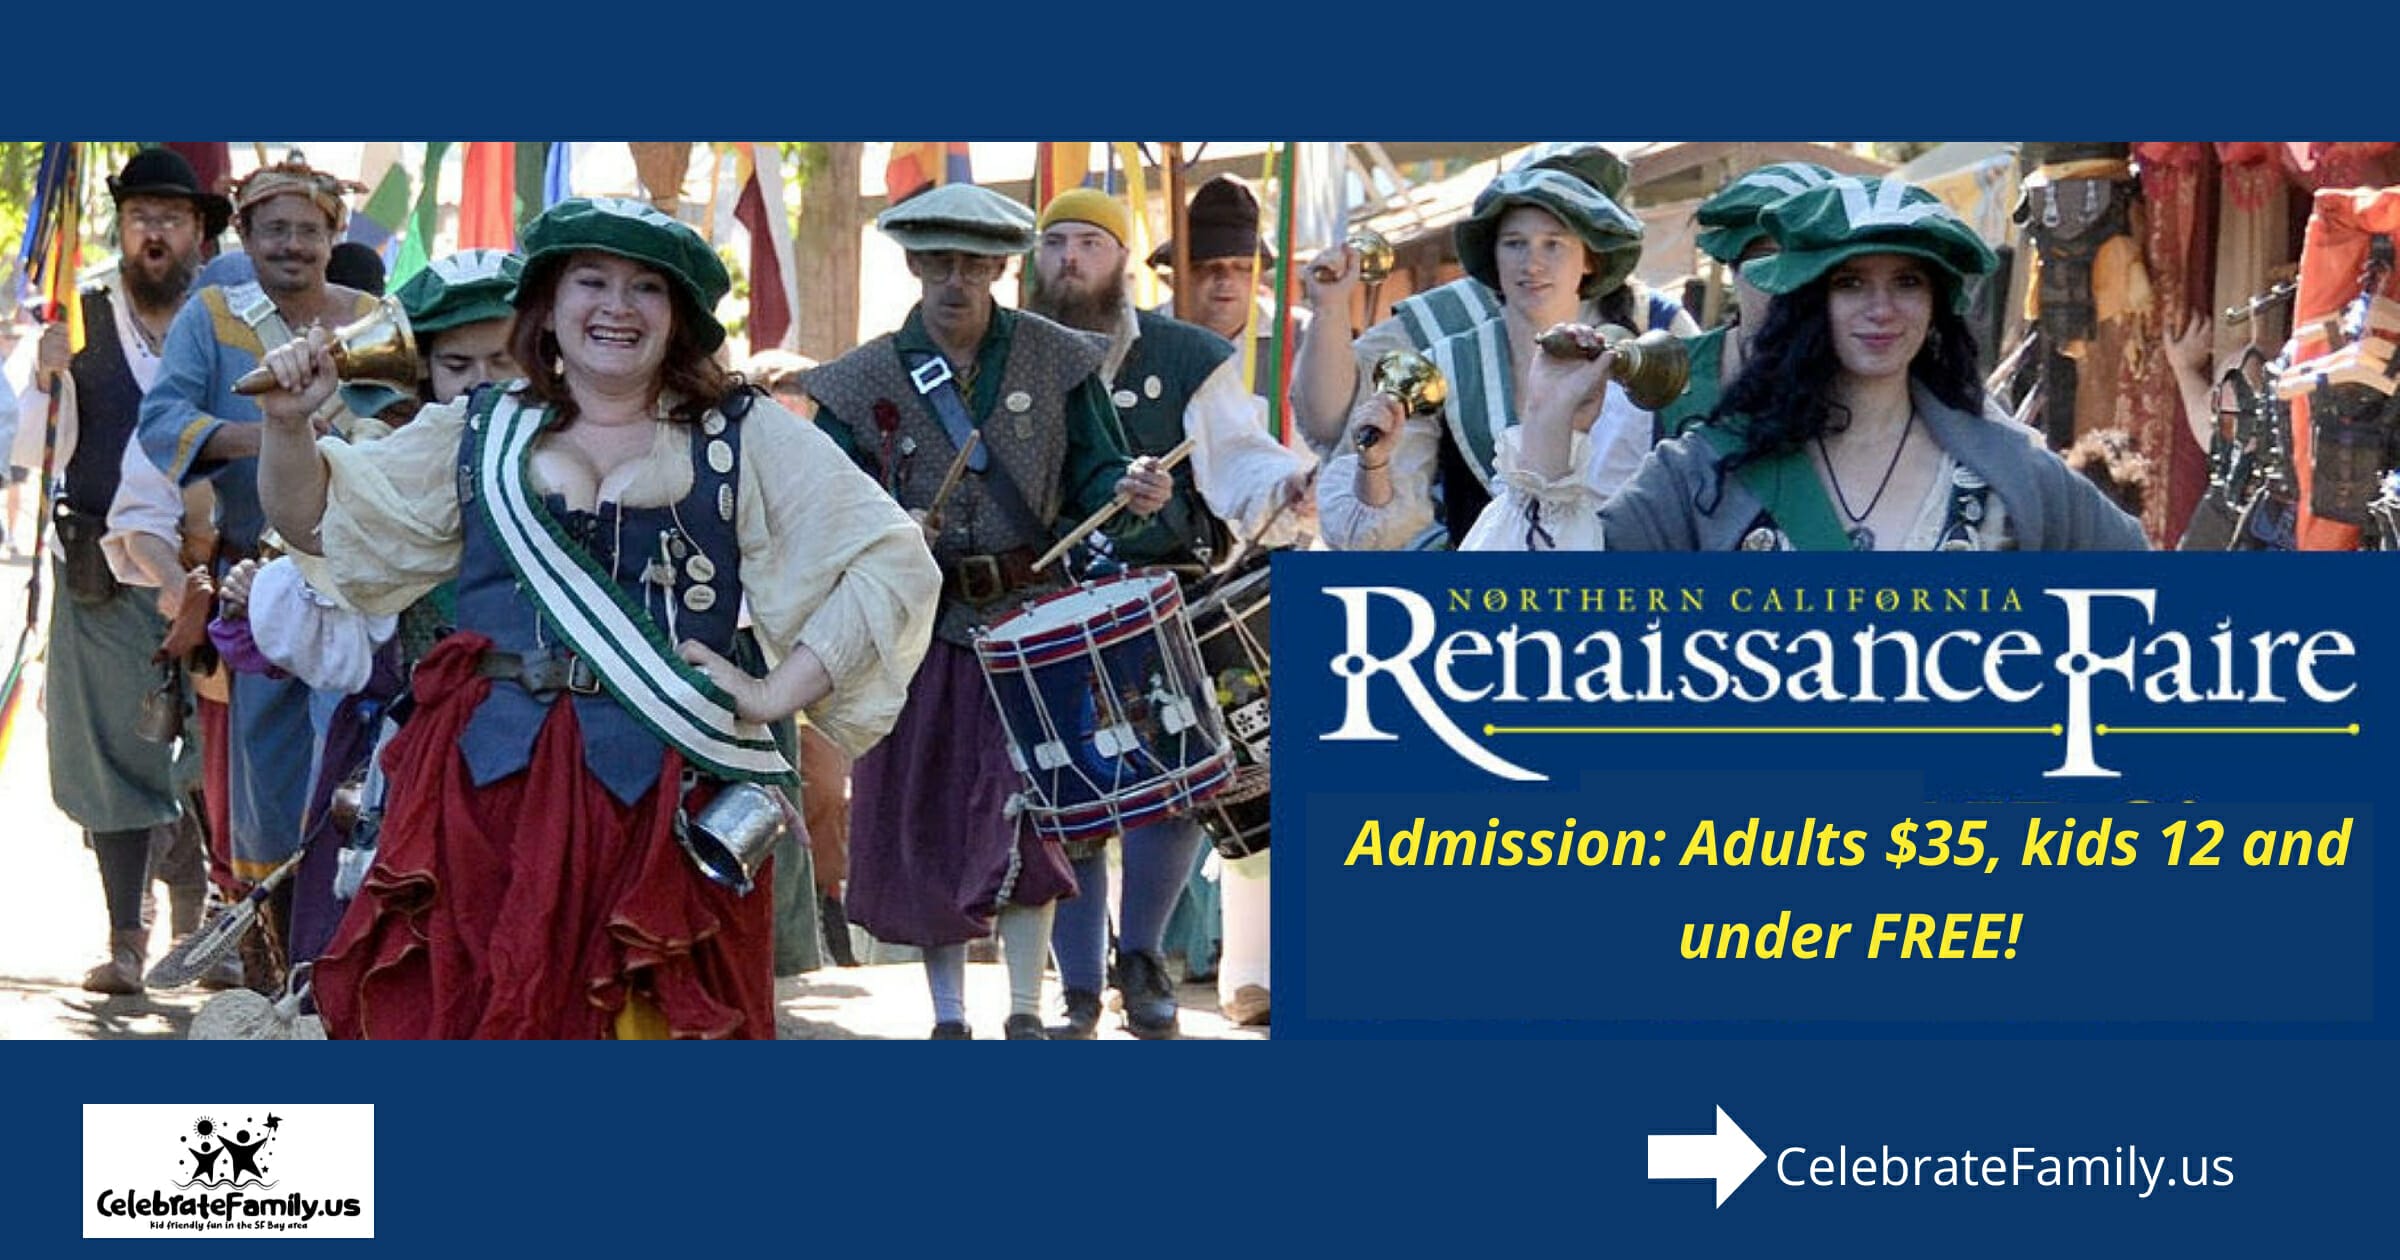 Northern California Renaissance Faire, Entertainment, Artisan Marketplace